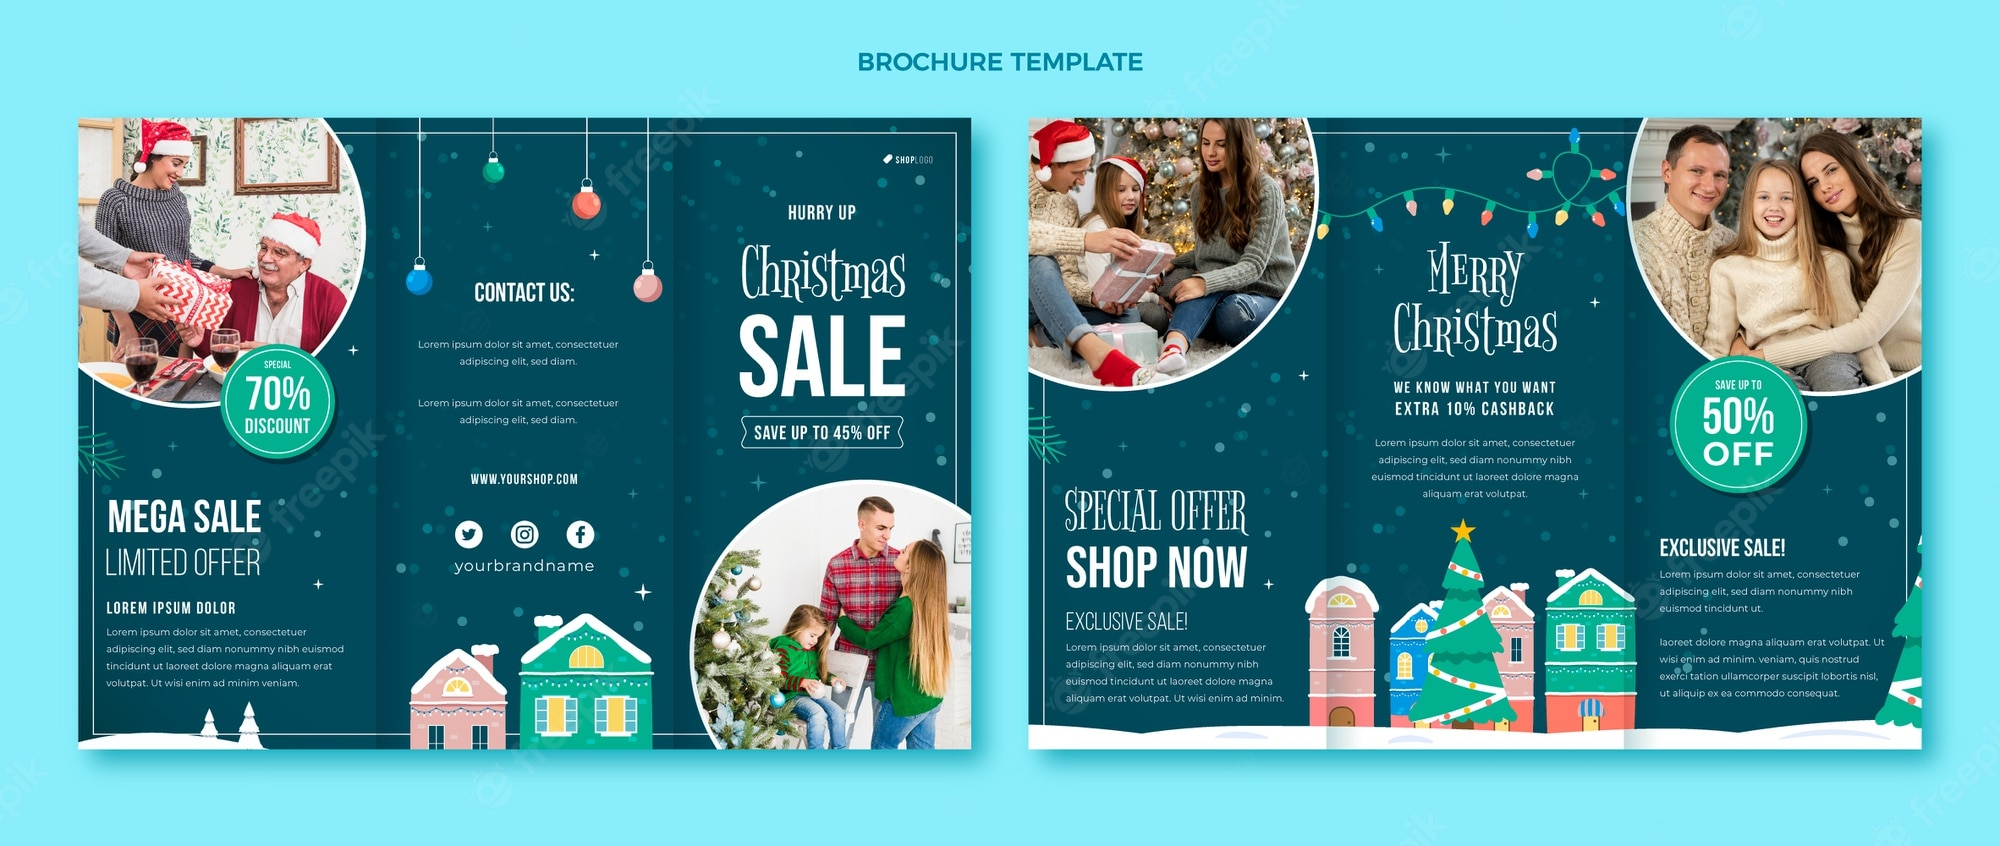 Christmas brochure Vectors & Illustrations for Free Download  Freepik Regarding Christmas Brochure Templates Free